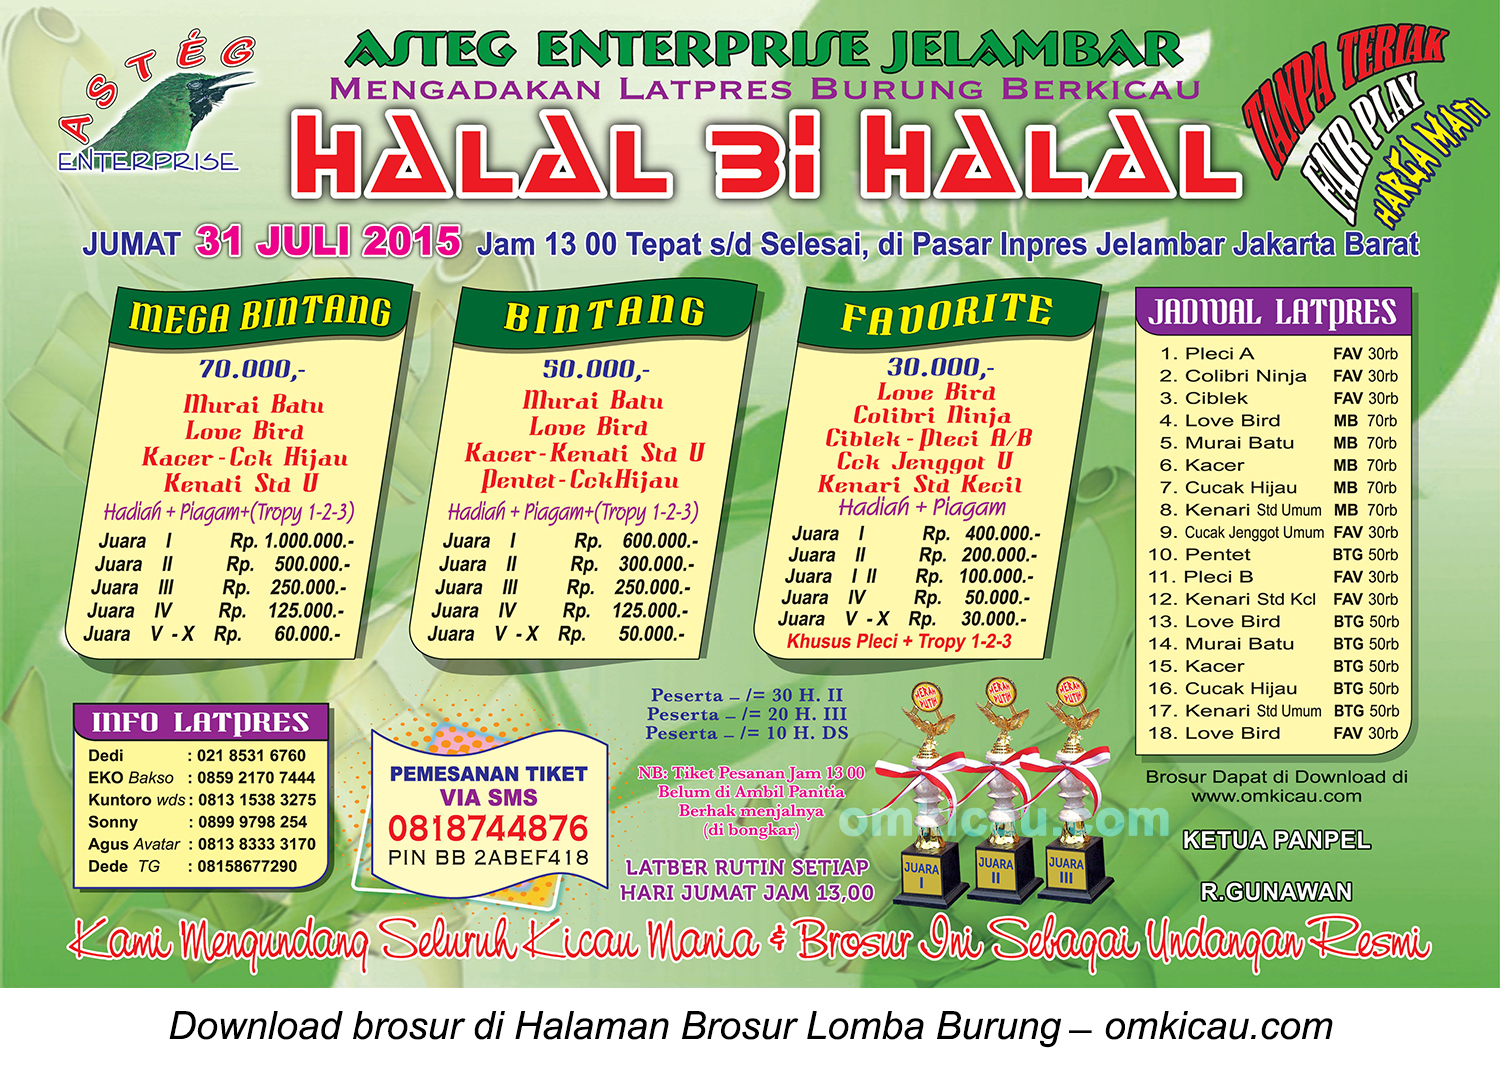 Brosur Latpres Halal Bihalal Asteg Enterprise, Jakarta, 31 Juli 2015